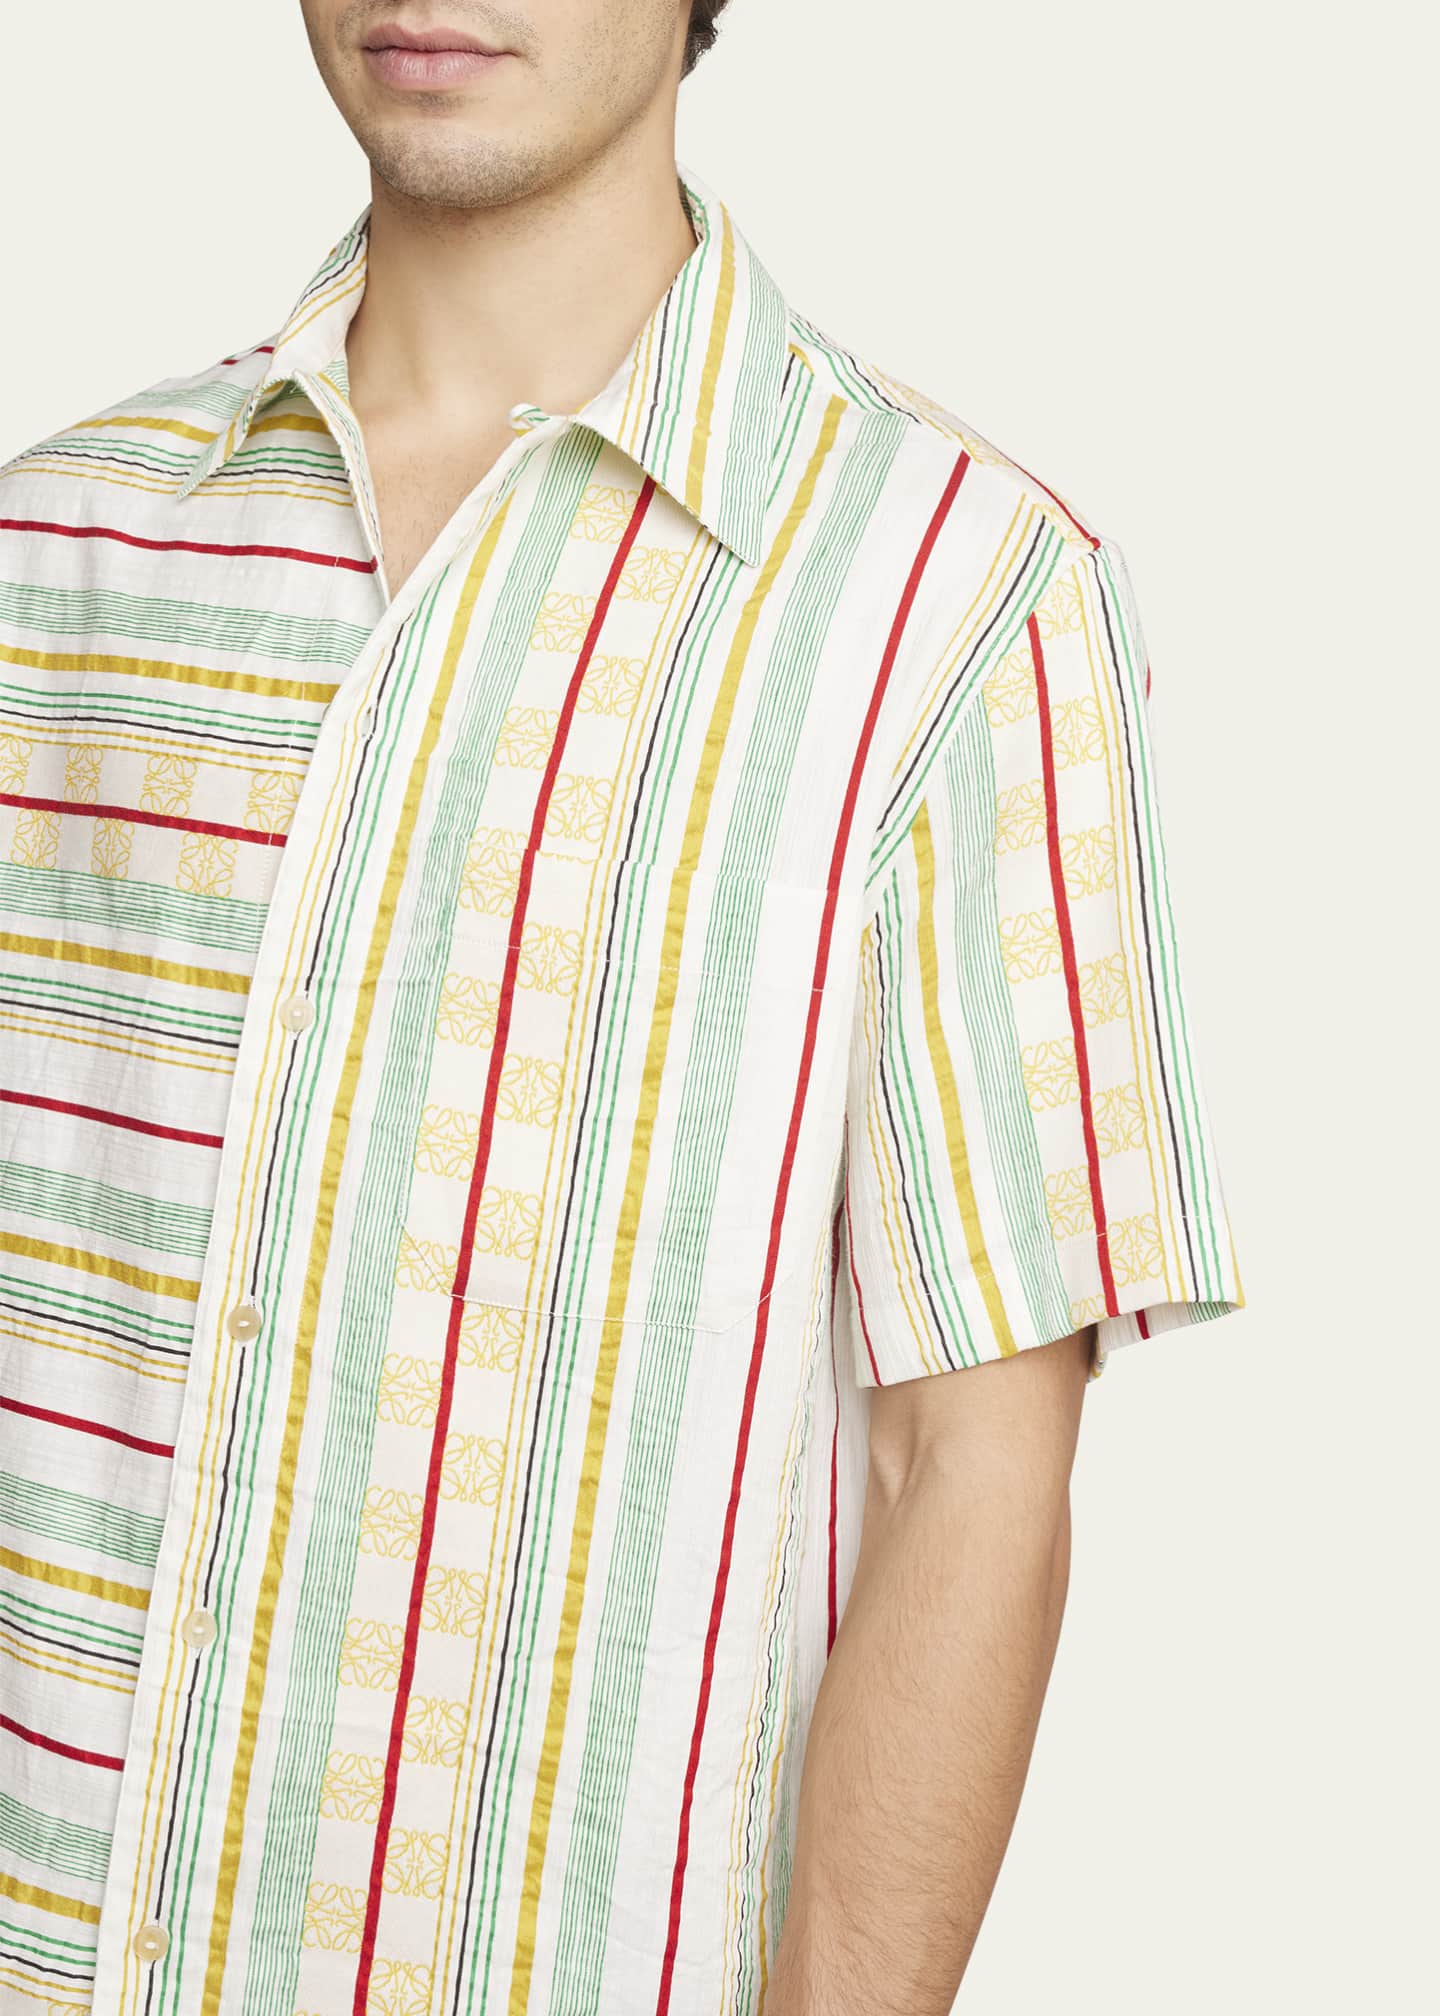 Loewe x Paula's Ibiza Men's Asymmetric Striped Sport Shirt 